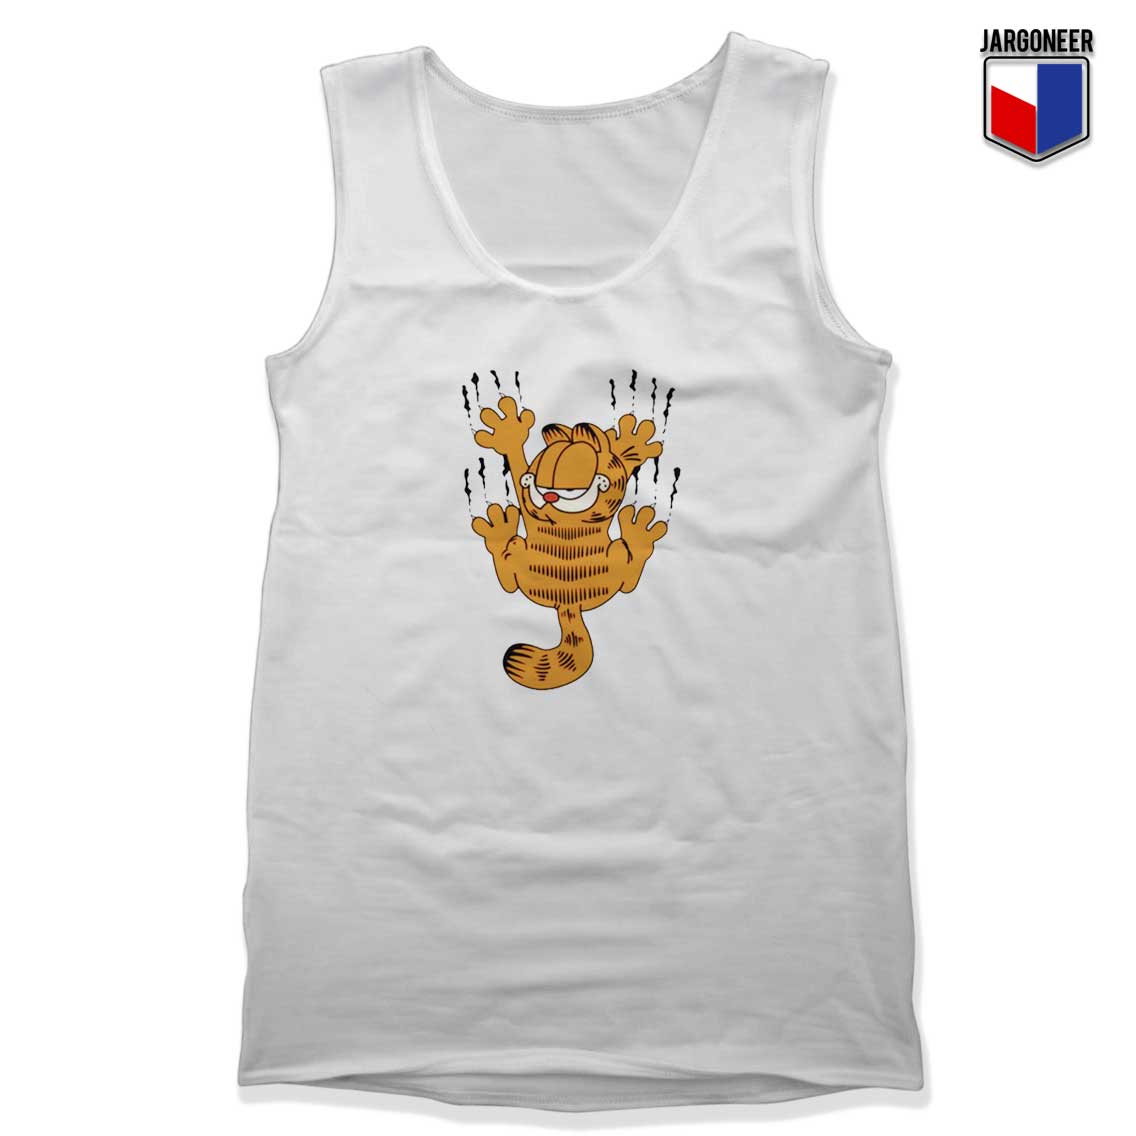 Garfield Scratching Tank Top - Shop Unique Graphic Cool Shirt Designs